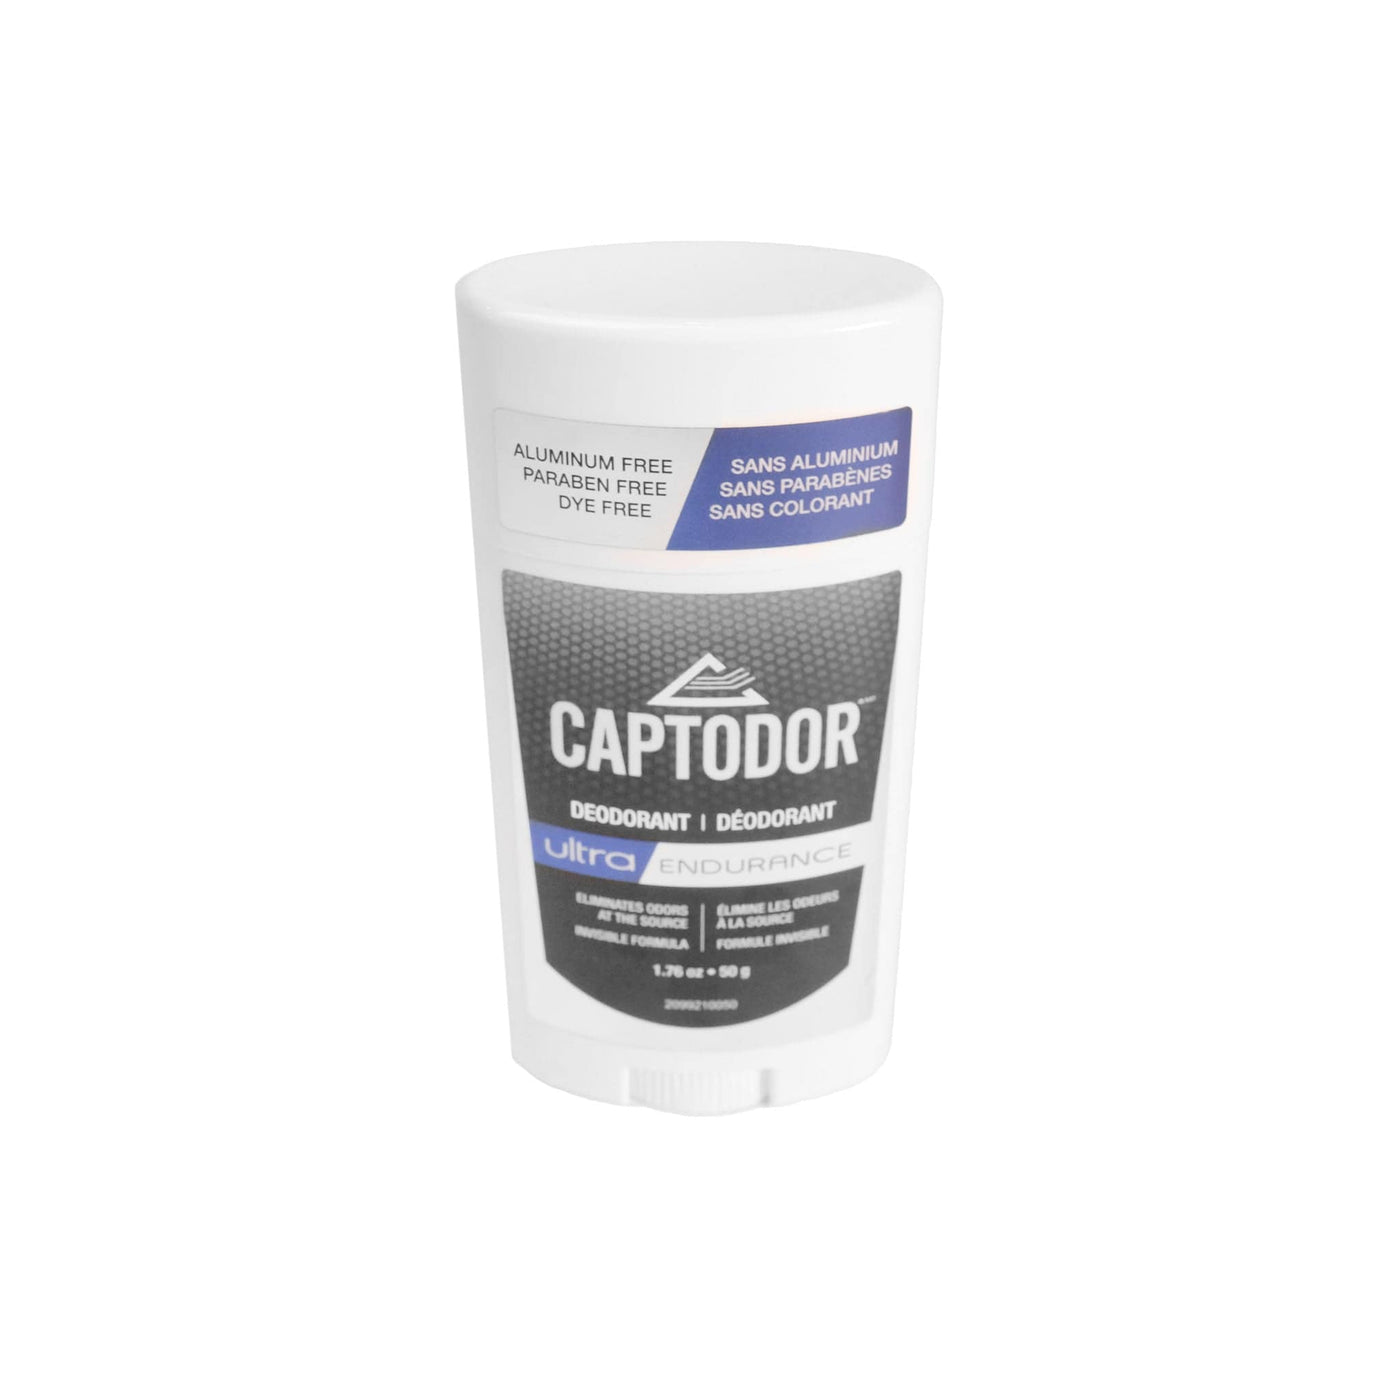 Captodor Aluminum Free Deodorant Bar - The Hockey Shop Source For Sports